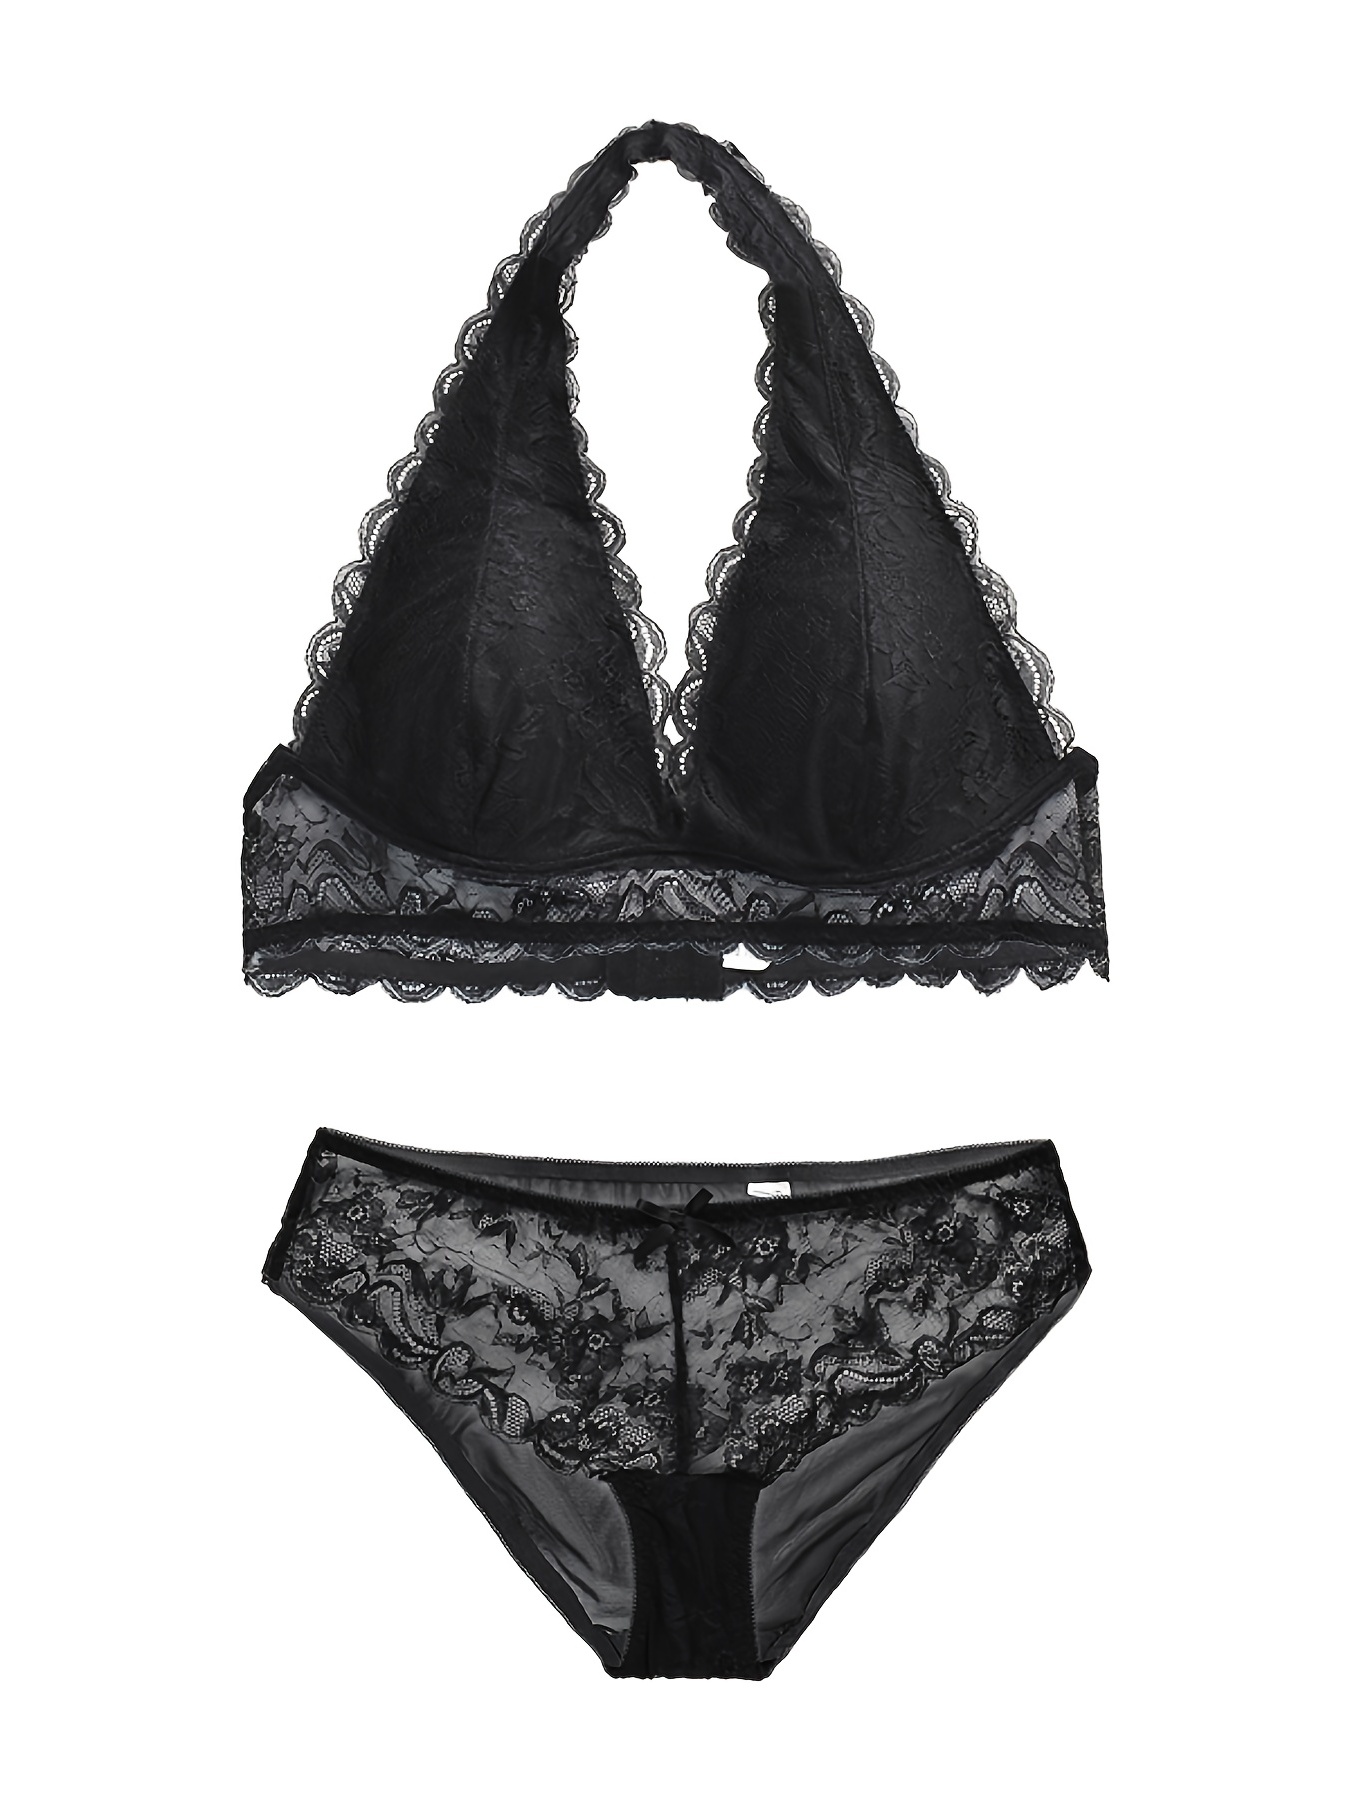 Sexy Black Sheer Lace Bralette Bra Panties Underwear Lingerie Set Plus Size  8-22